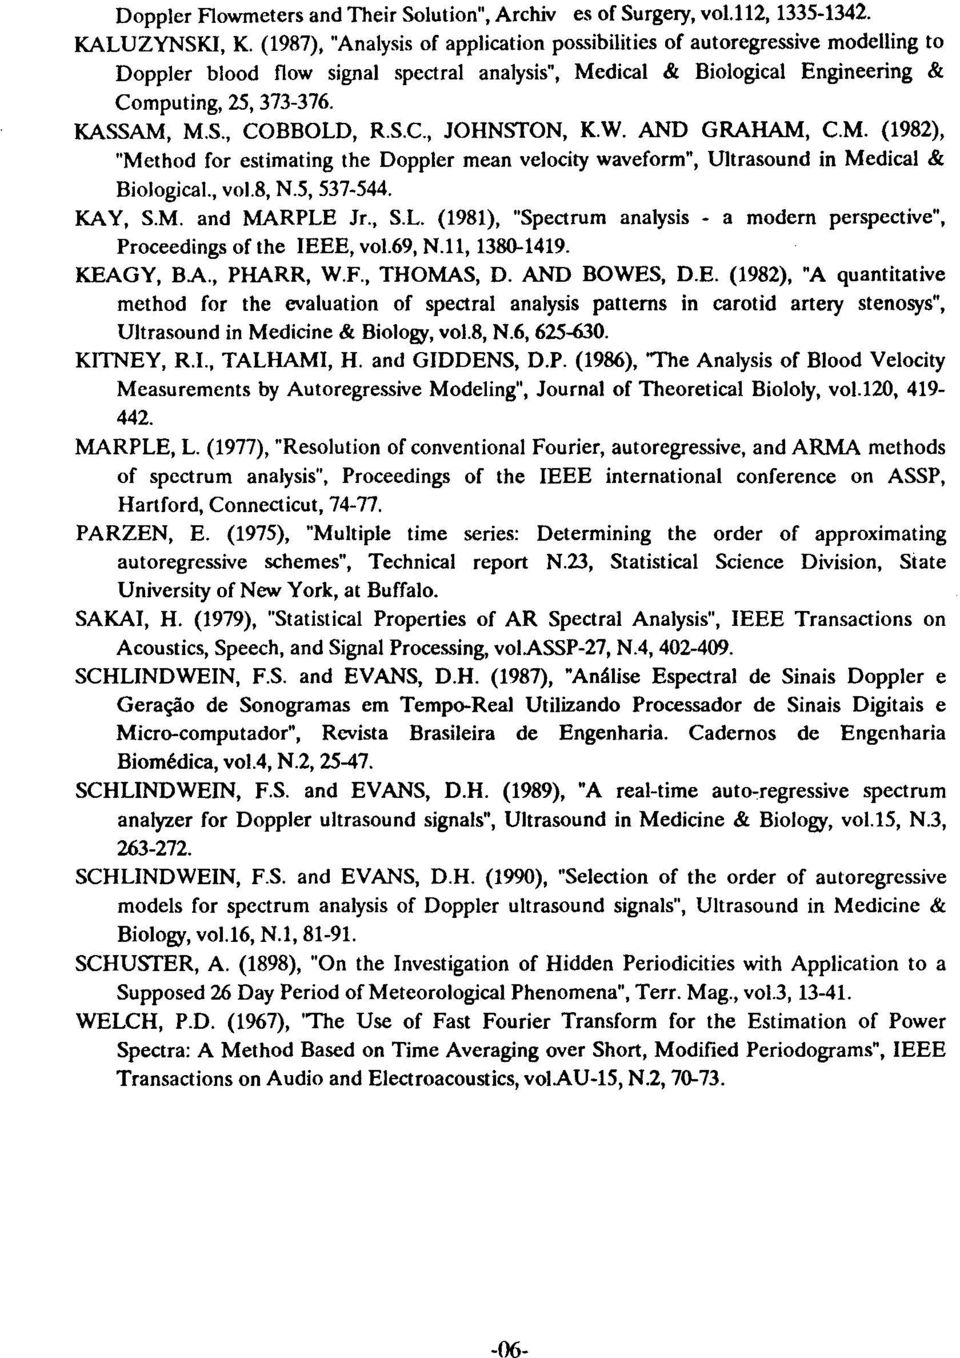 KASSAM, M.S., COBBOLD, R.S.C., JOHNSTON, K,W. ANO GRAHAM, C.M. (1982), "Method for estimating the Doppler mean velocity waveform", Ultrasound in MedicaI & BiologicaL, vol8, N.5, 537-544. KAY, S.M. and MARPLE Jr.